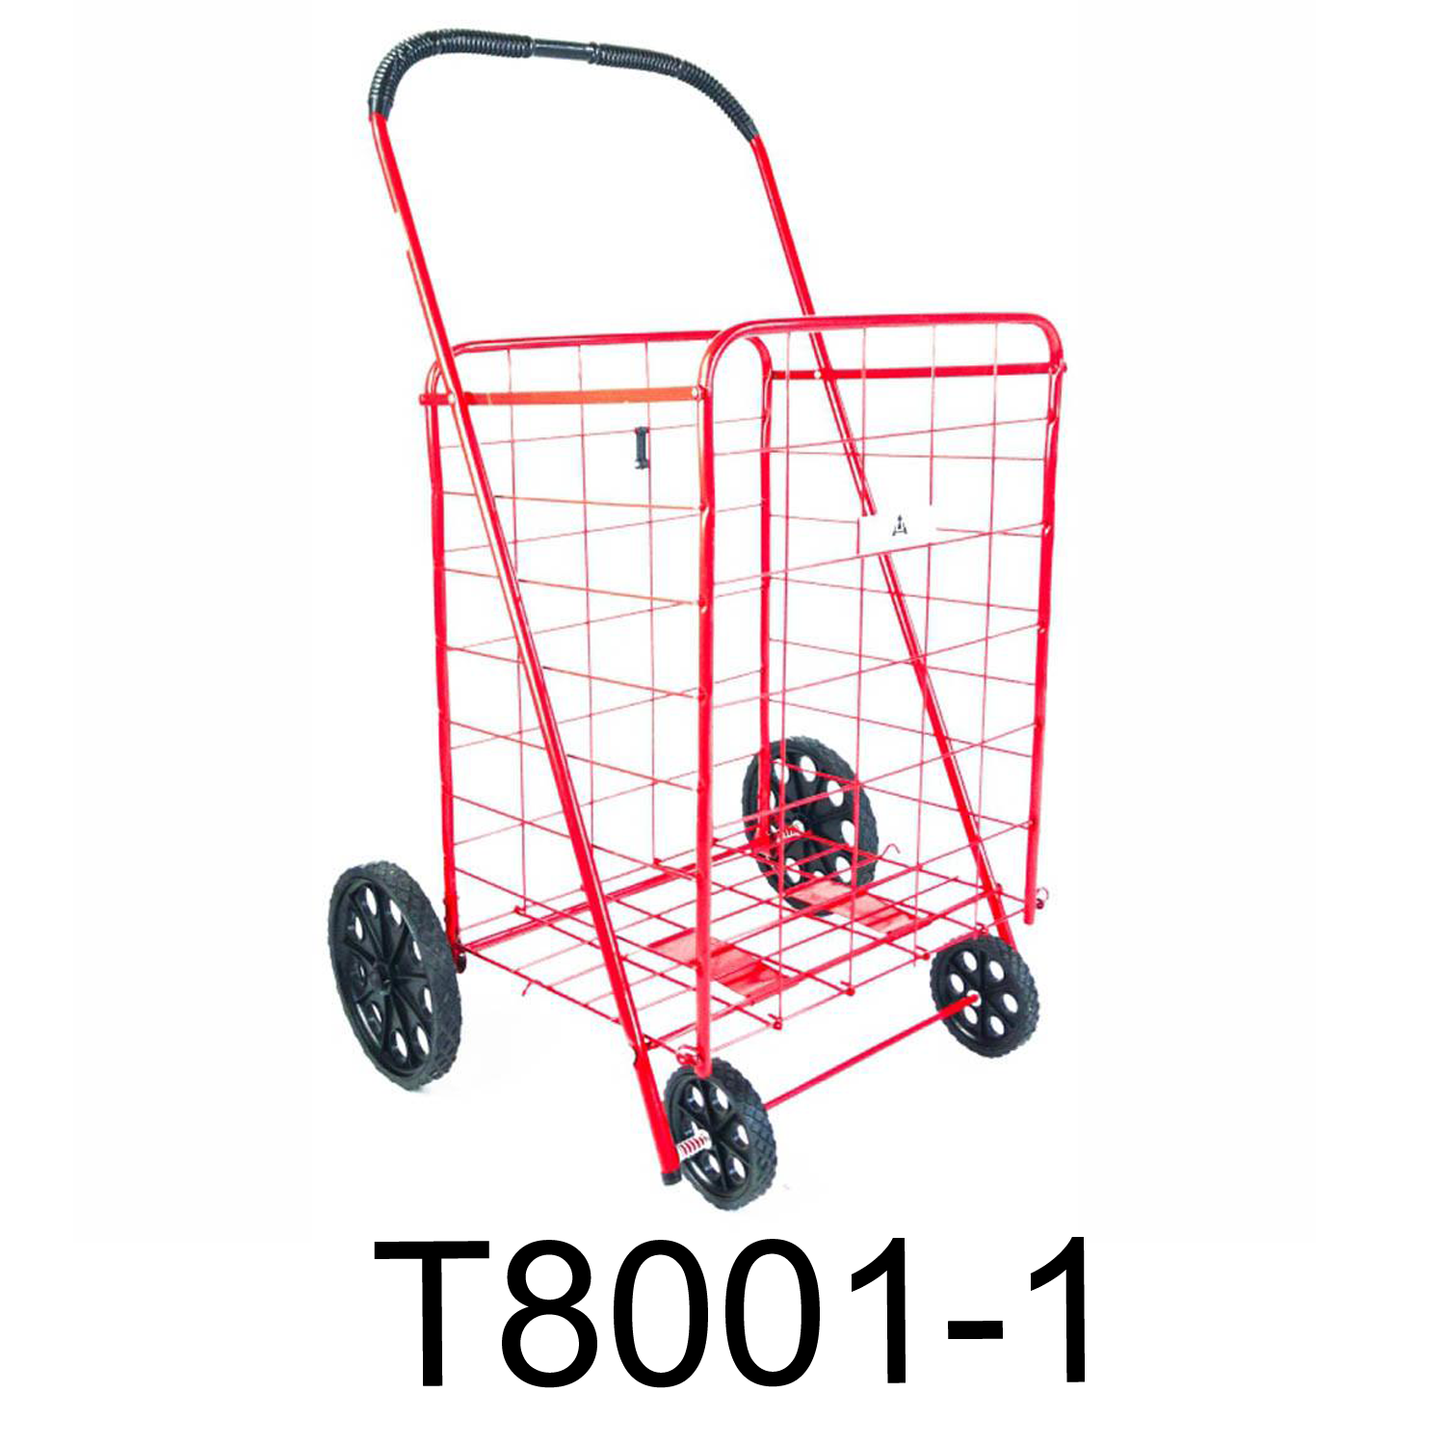 Heavy Duty Shopping Cart With Wheels